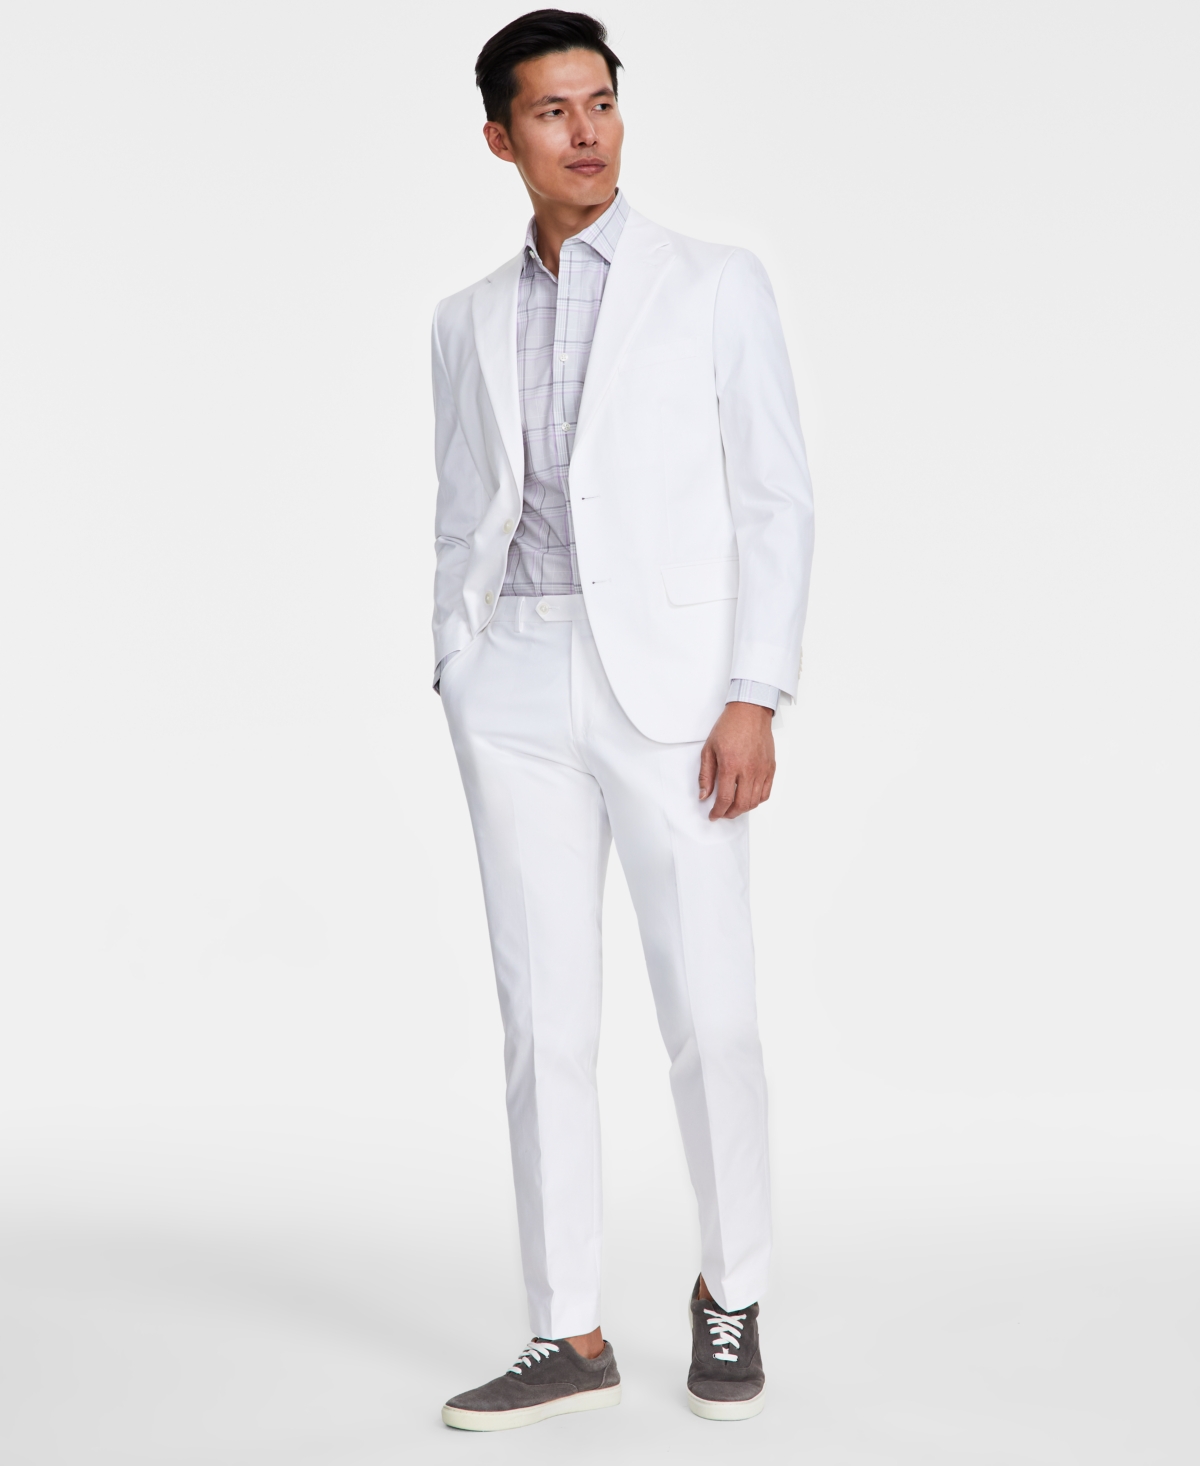 Tommy Hilfiger Modern Fit Suit Separates Jacket